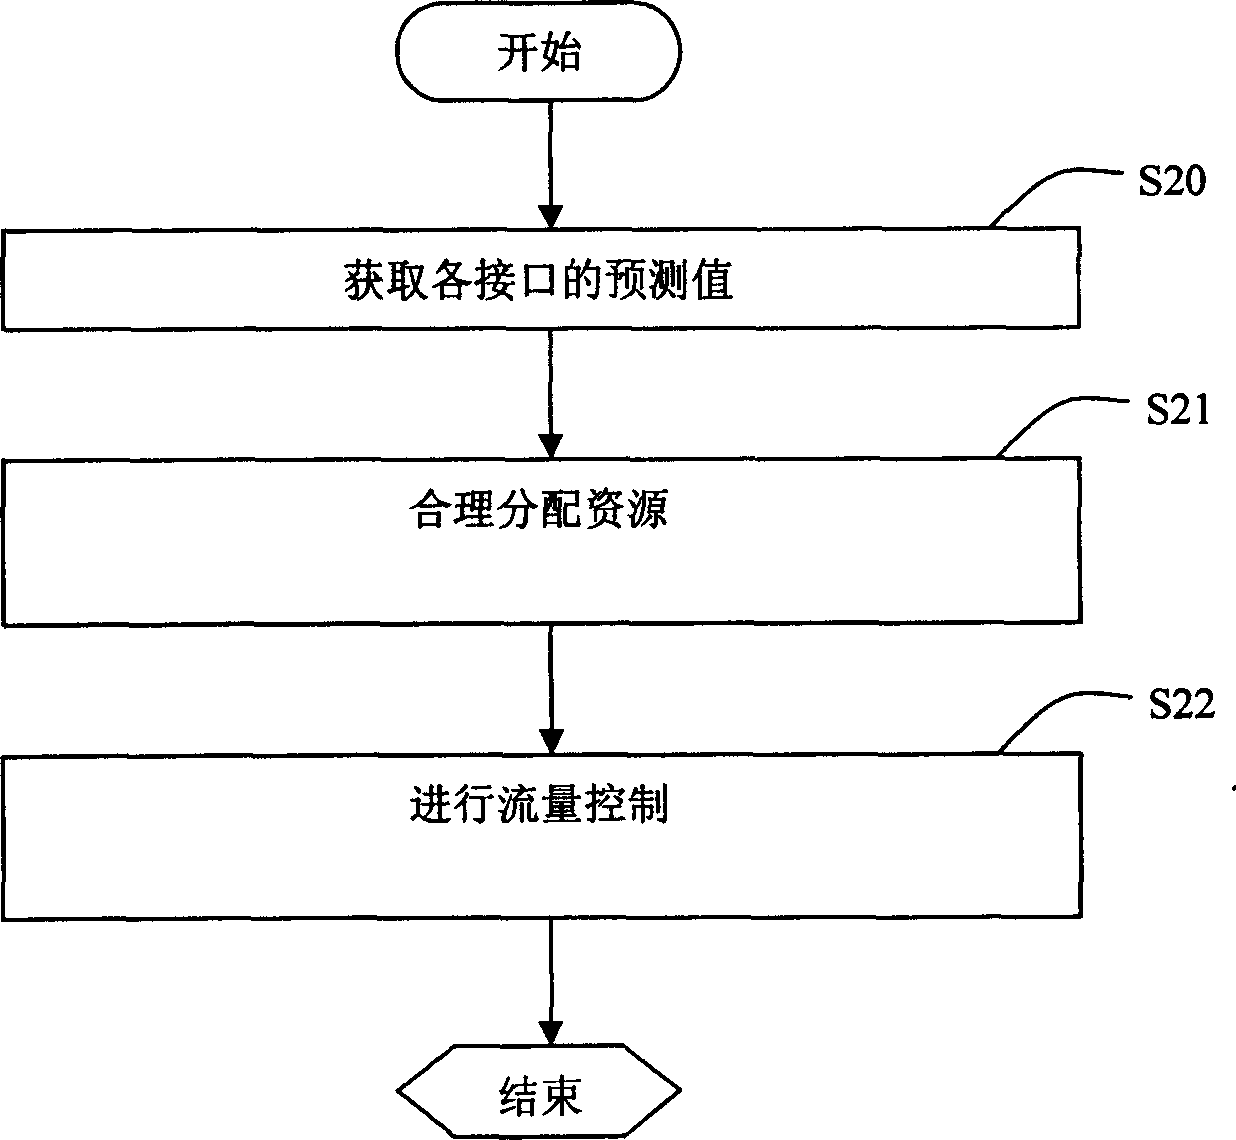 Multi-interface flow-balance controlling method